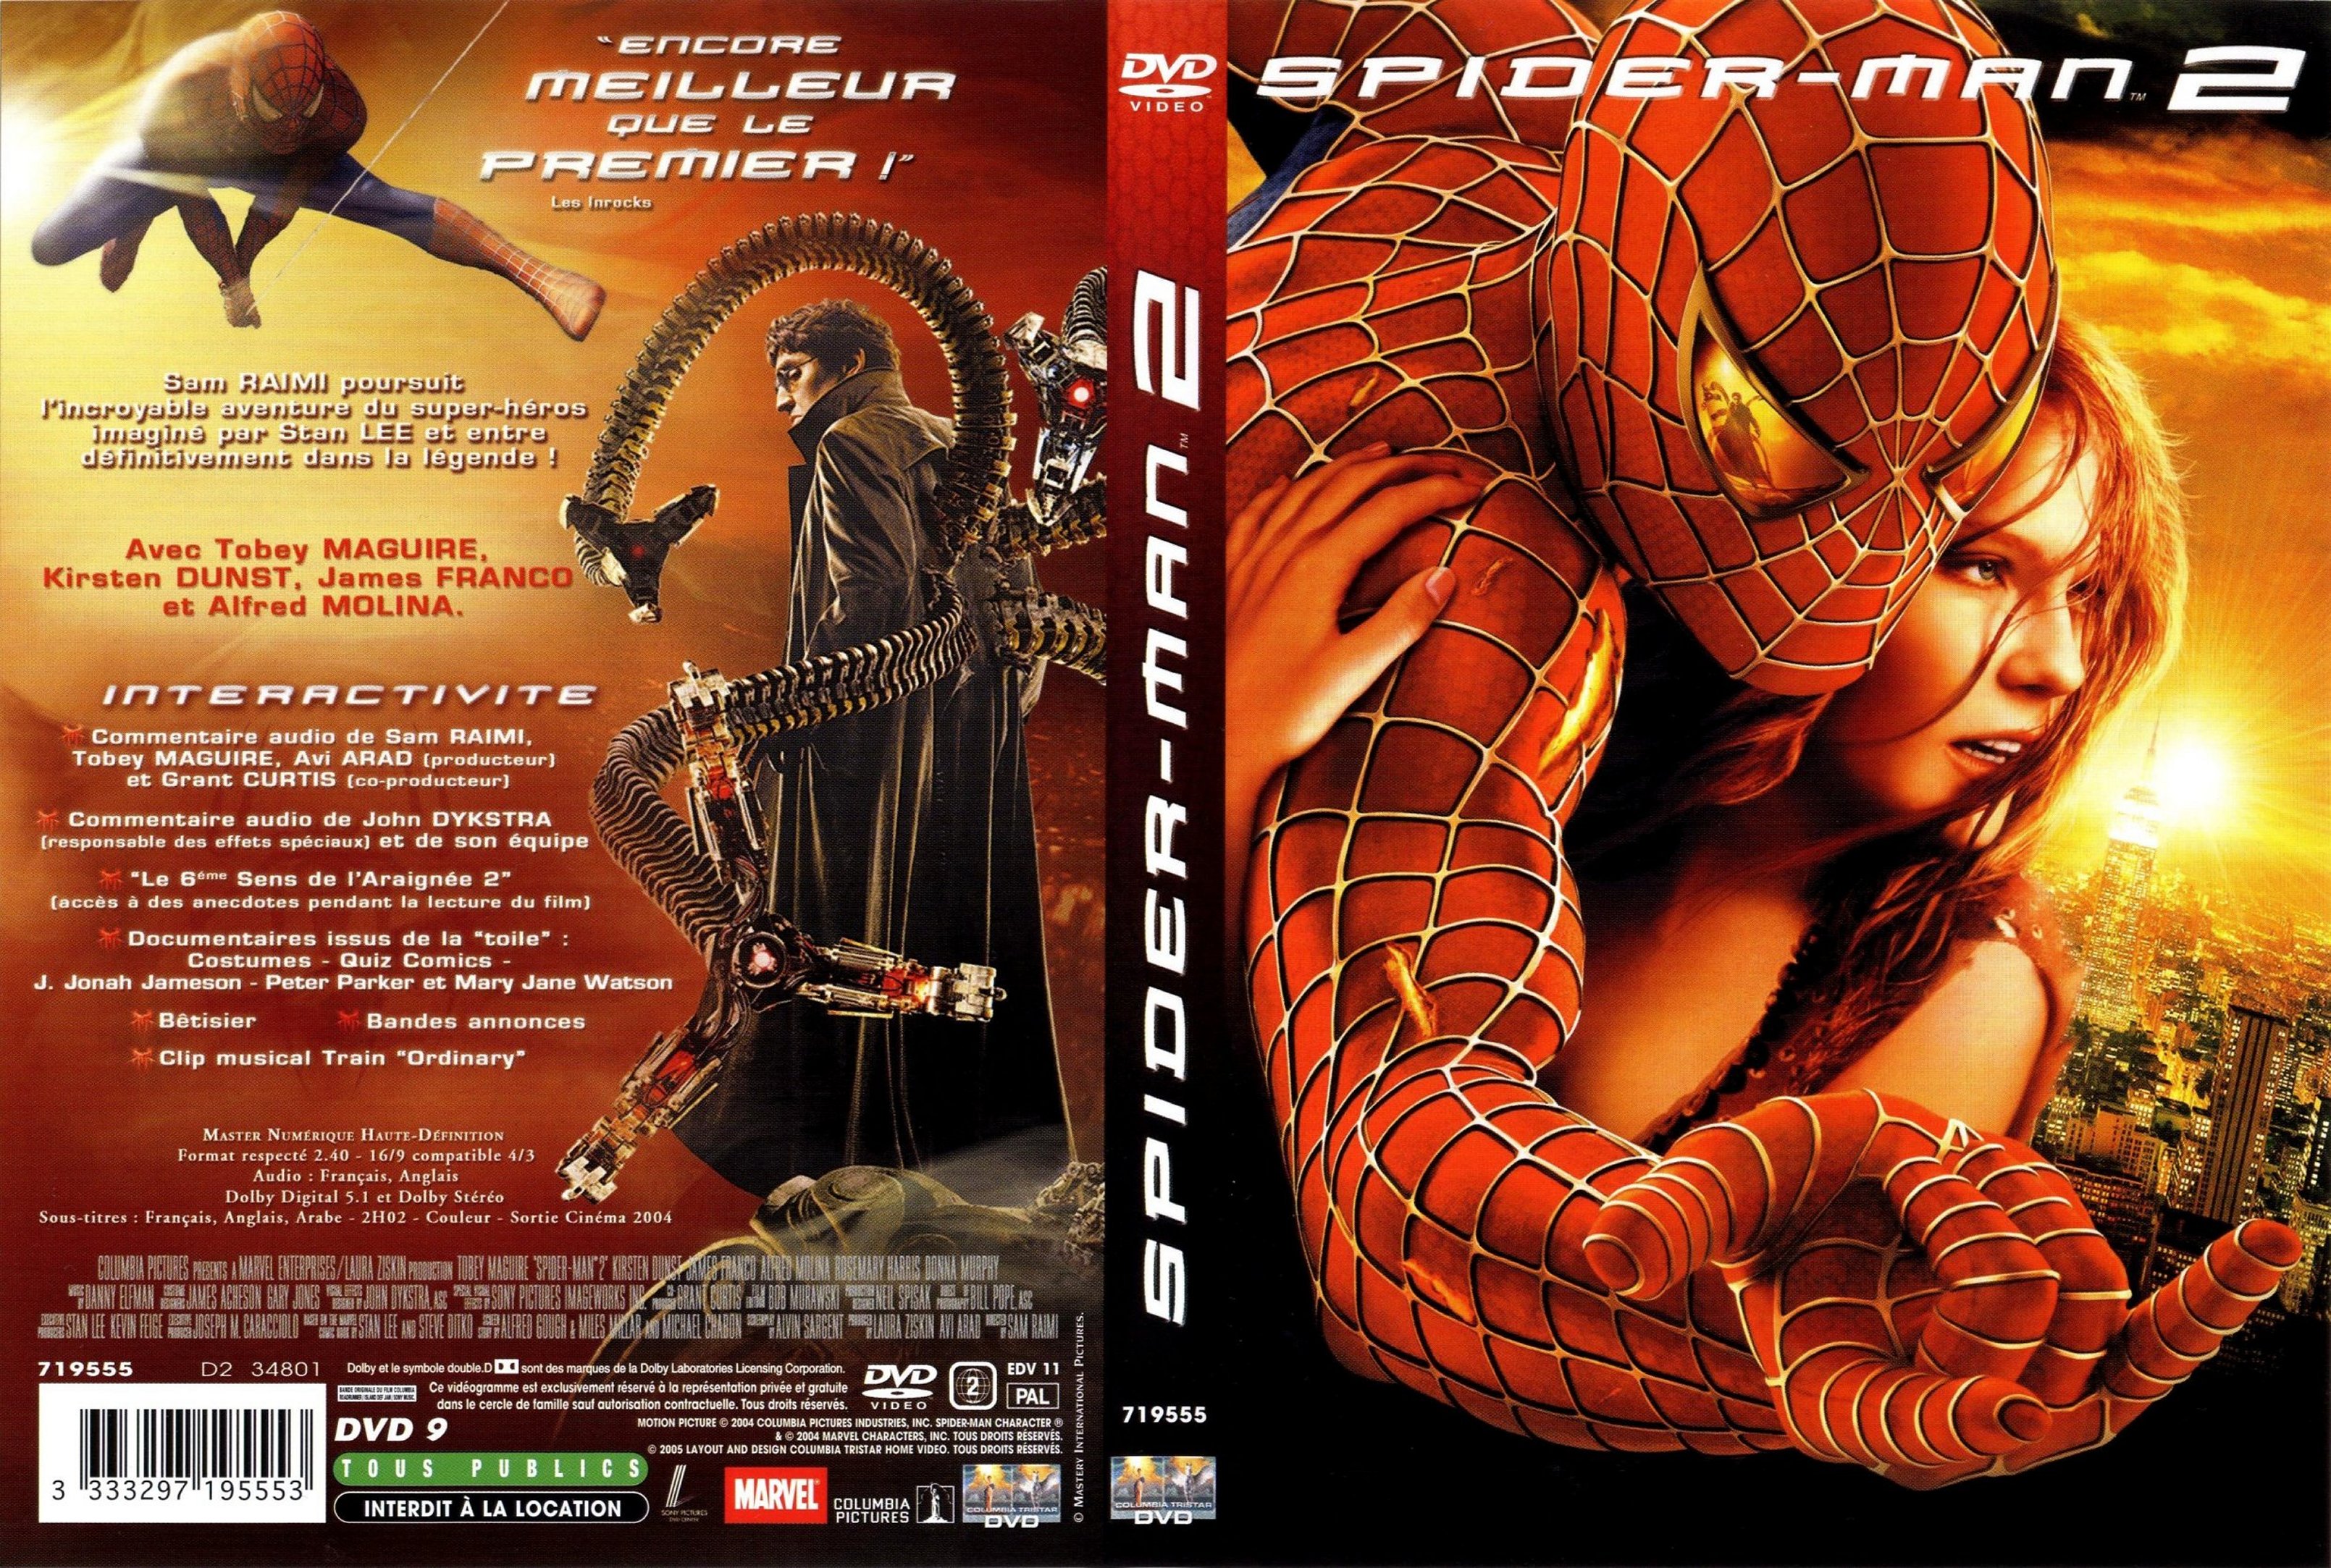 Jaquette DVD Spiderman 2